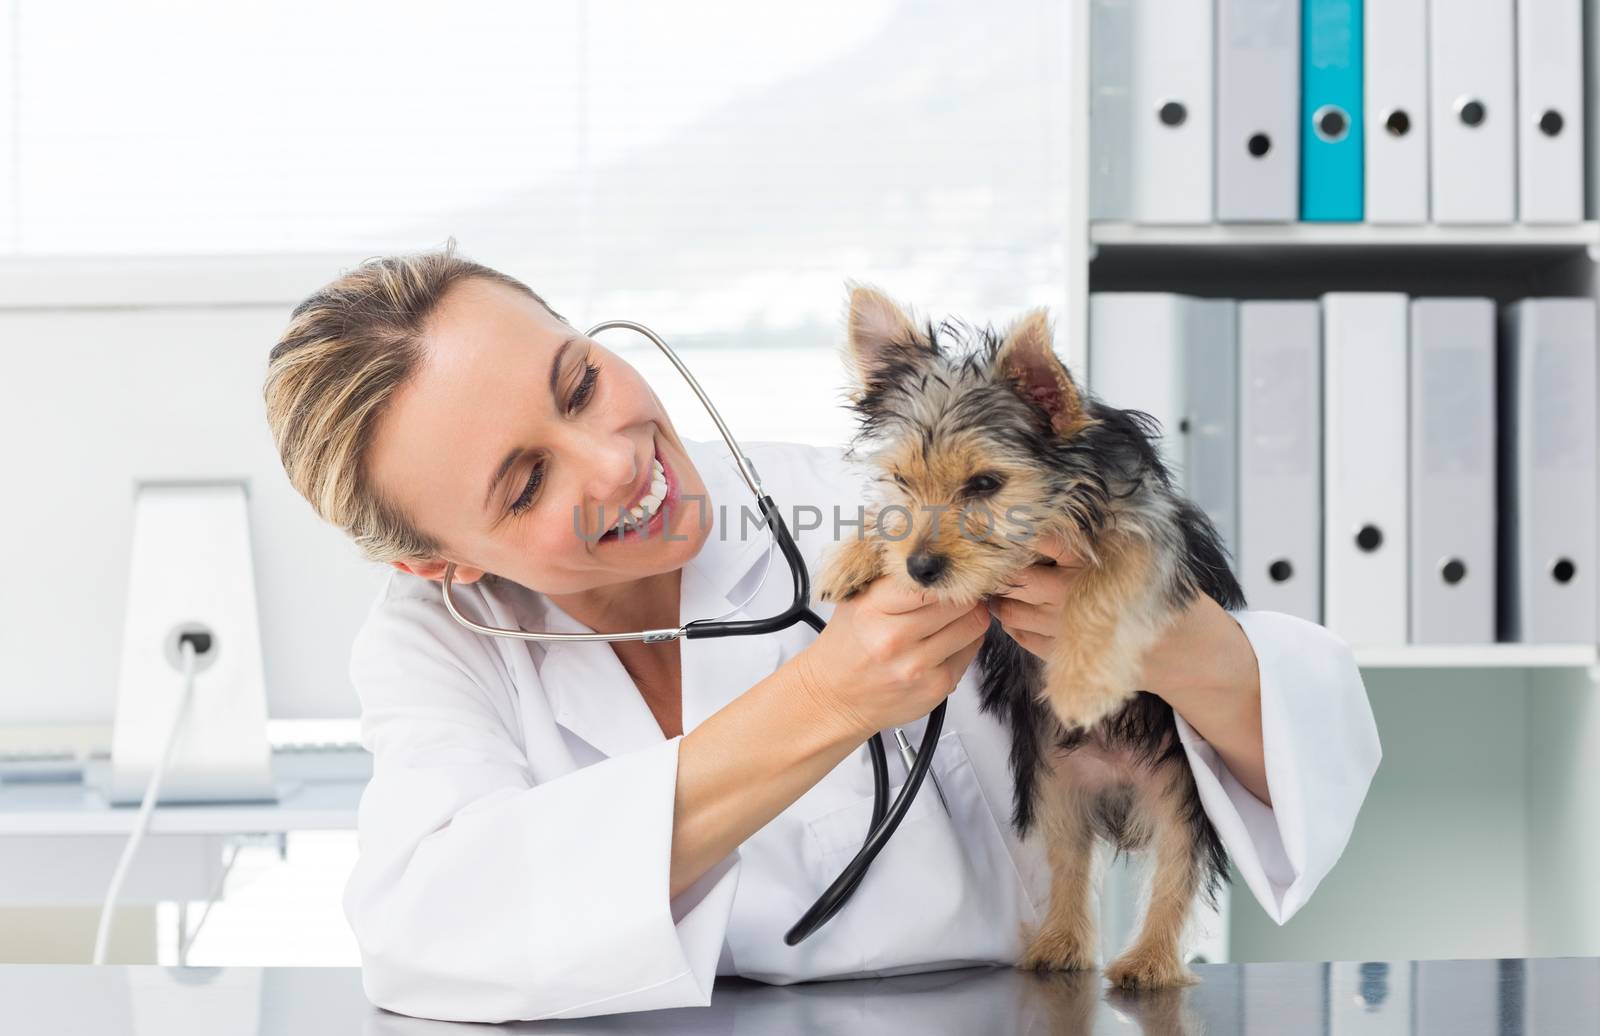 Veterinarian checking dog with stethoscope by Wavebreakmedia